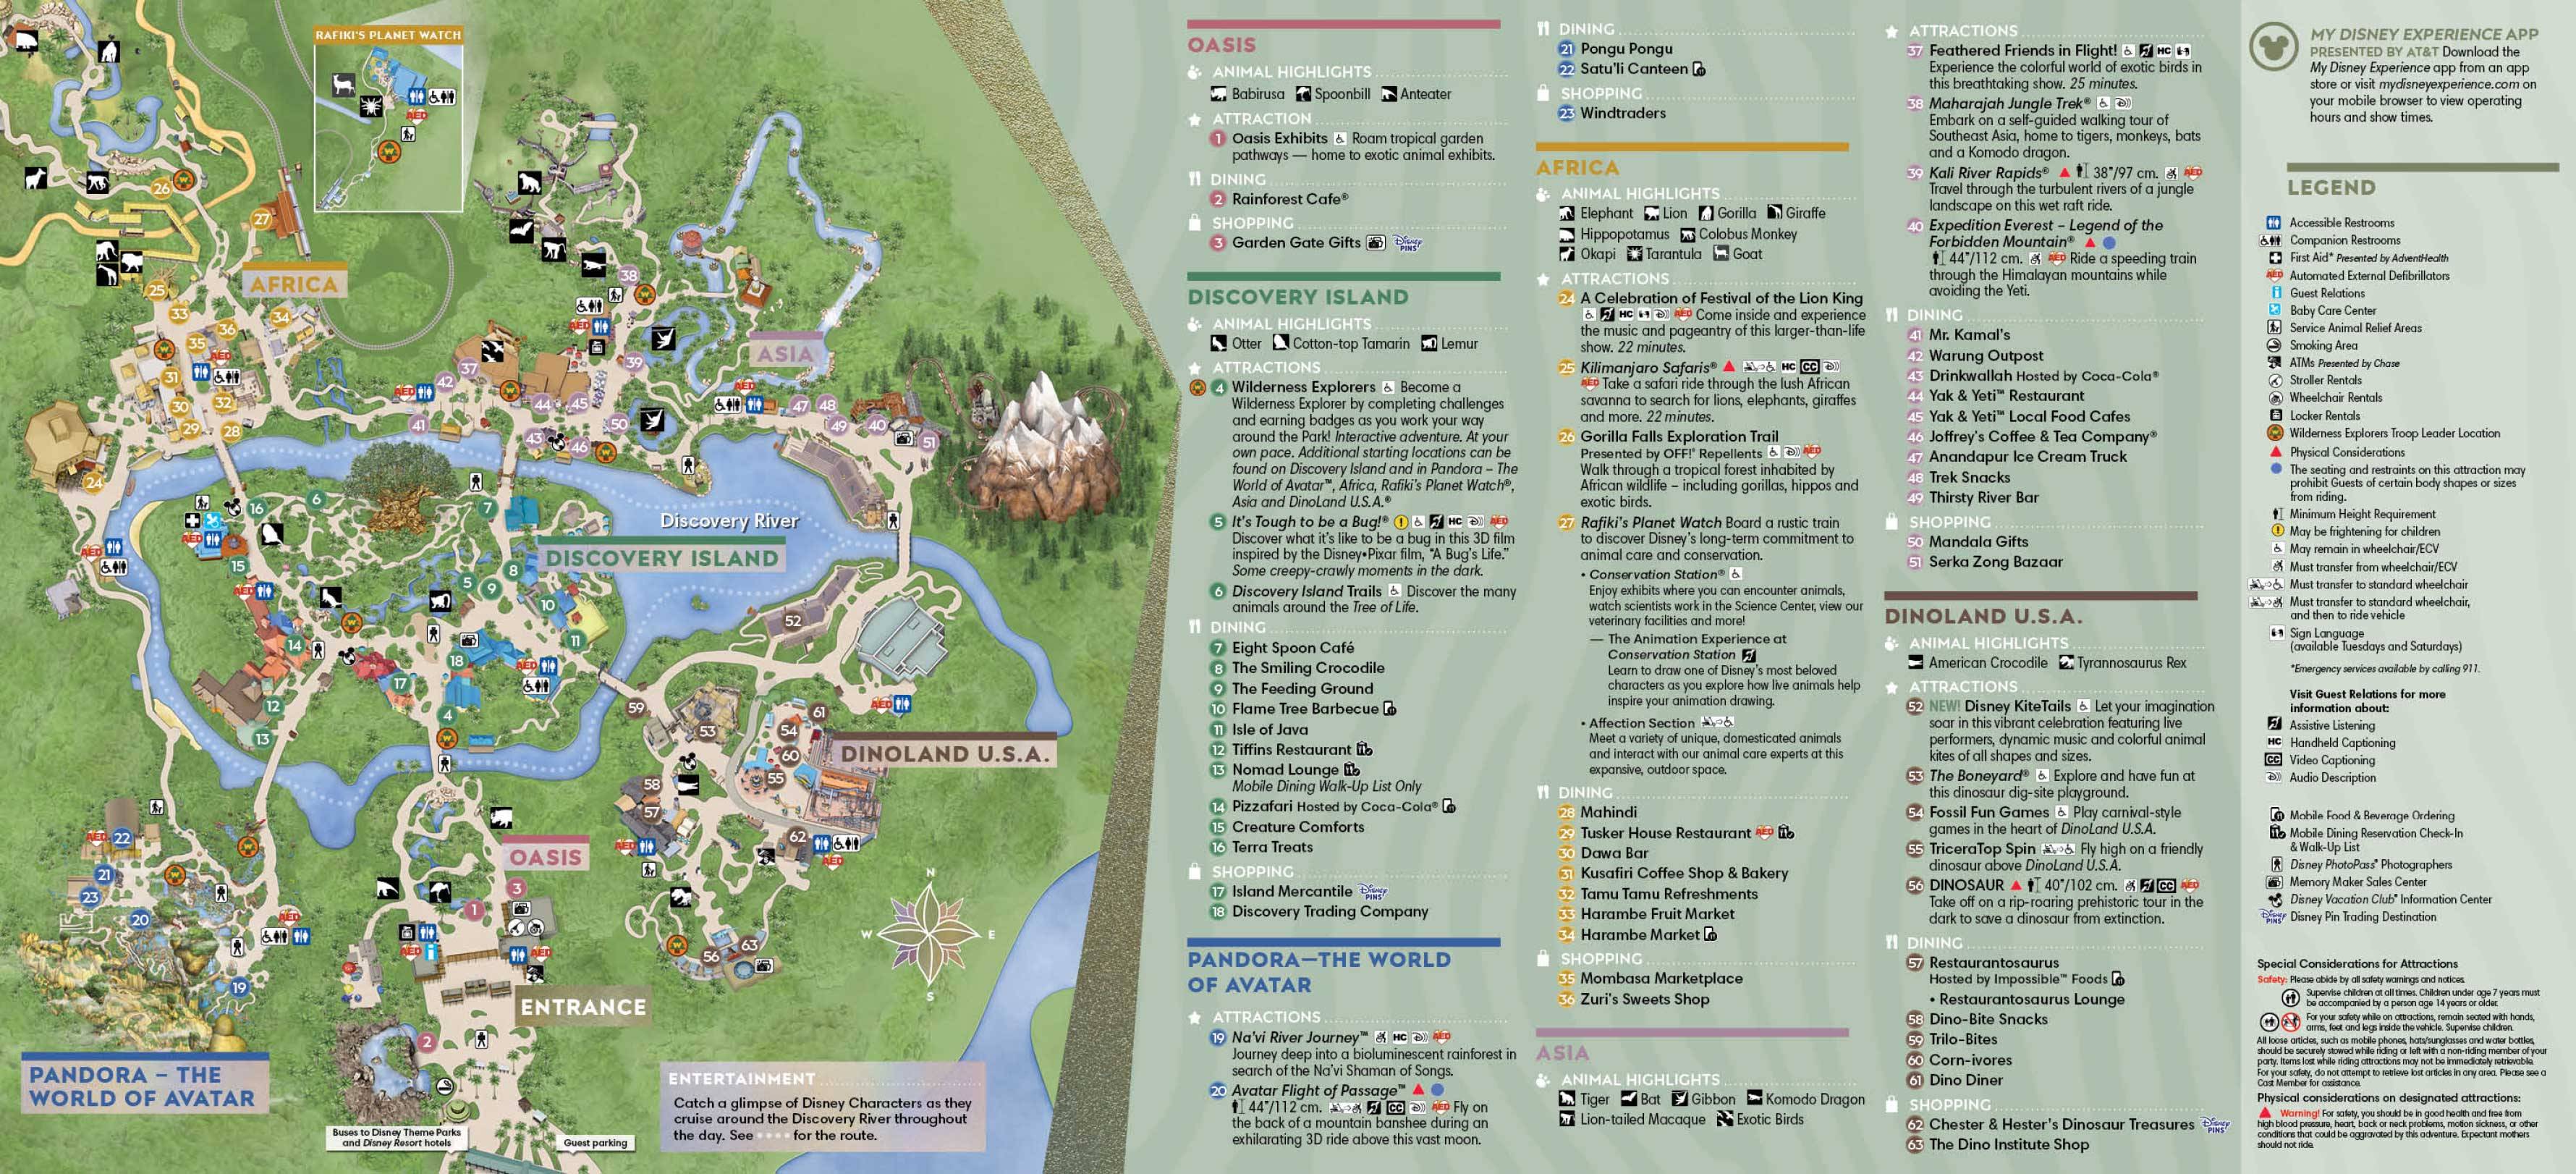 Walt Disney World 50th anniversary map - Disney's Animal Kingdom back